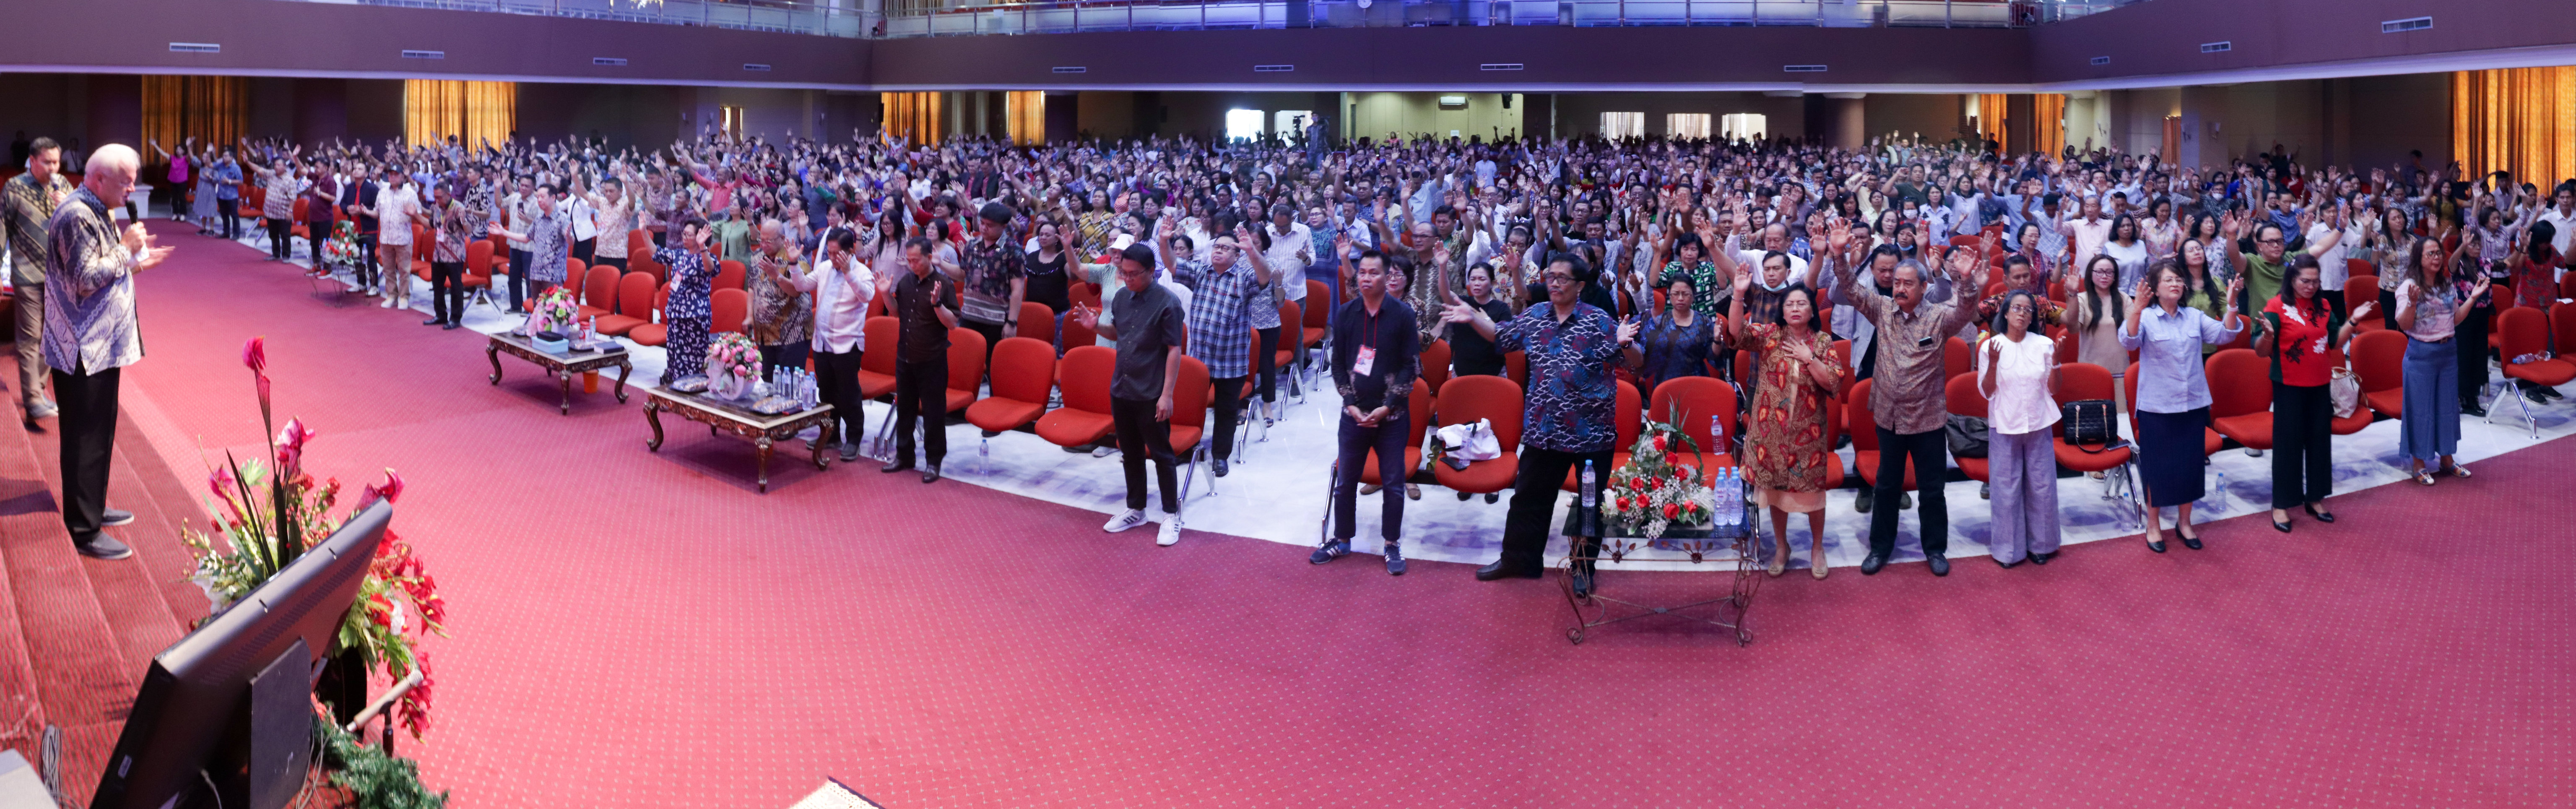 Gospel Revolution Seminar - Manado, Indonesia